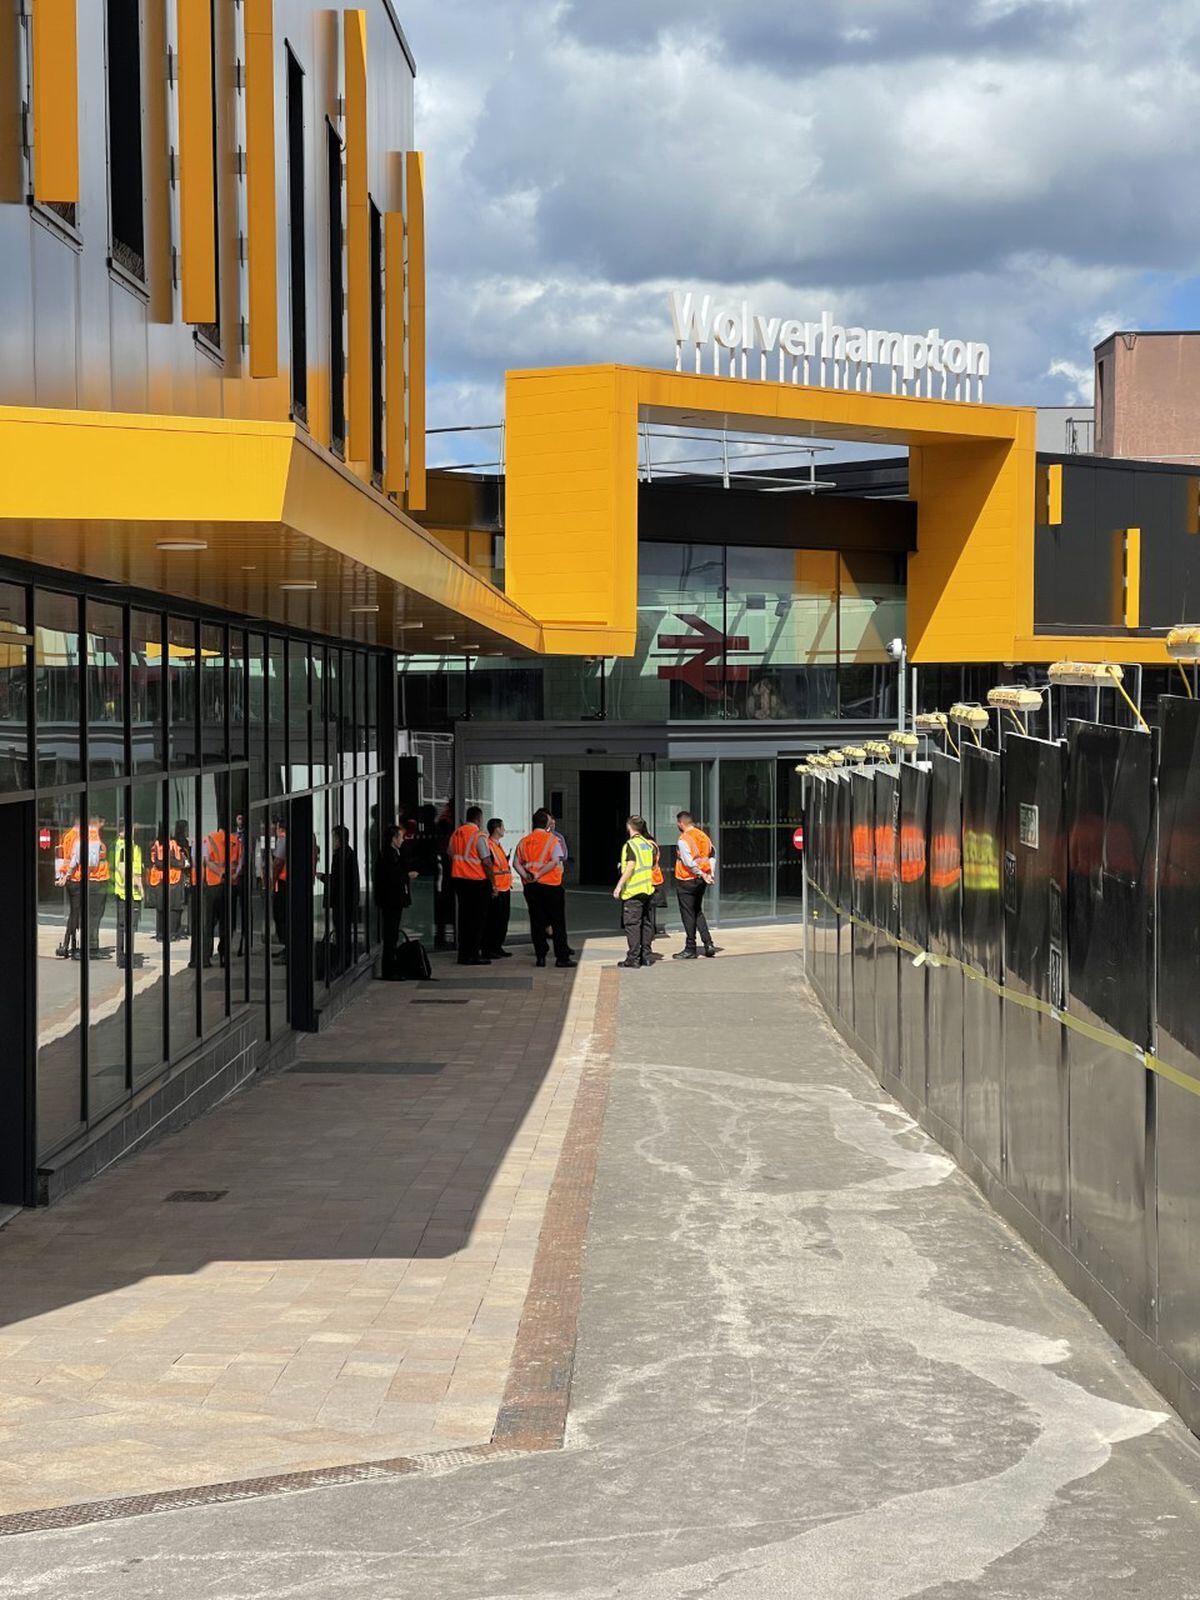 Wolverhampton Railway Station was evacuated